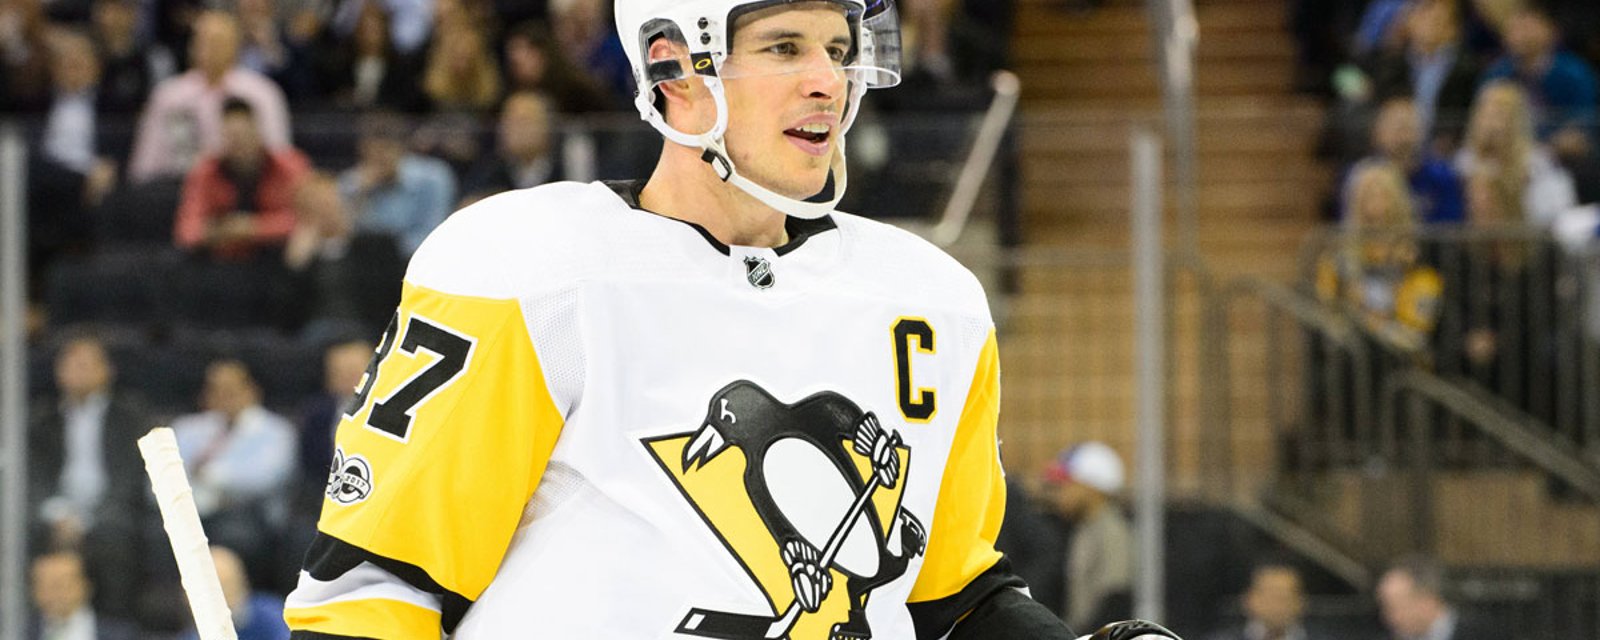 Breaking: A major milestone for Crosby! 